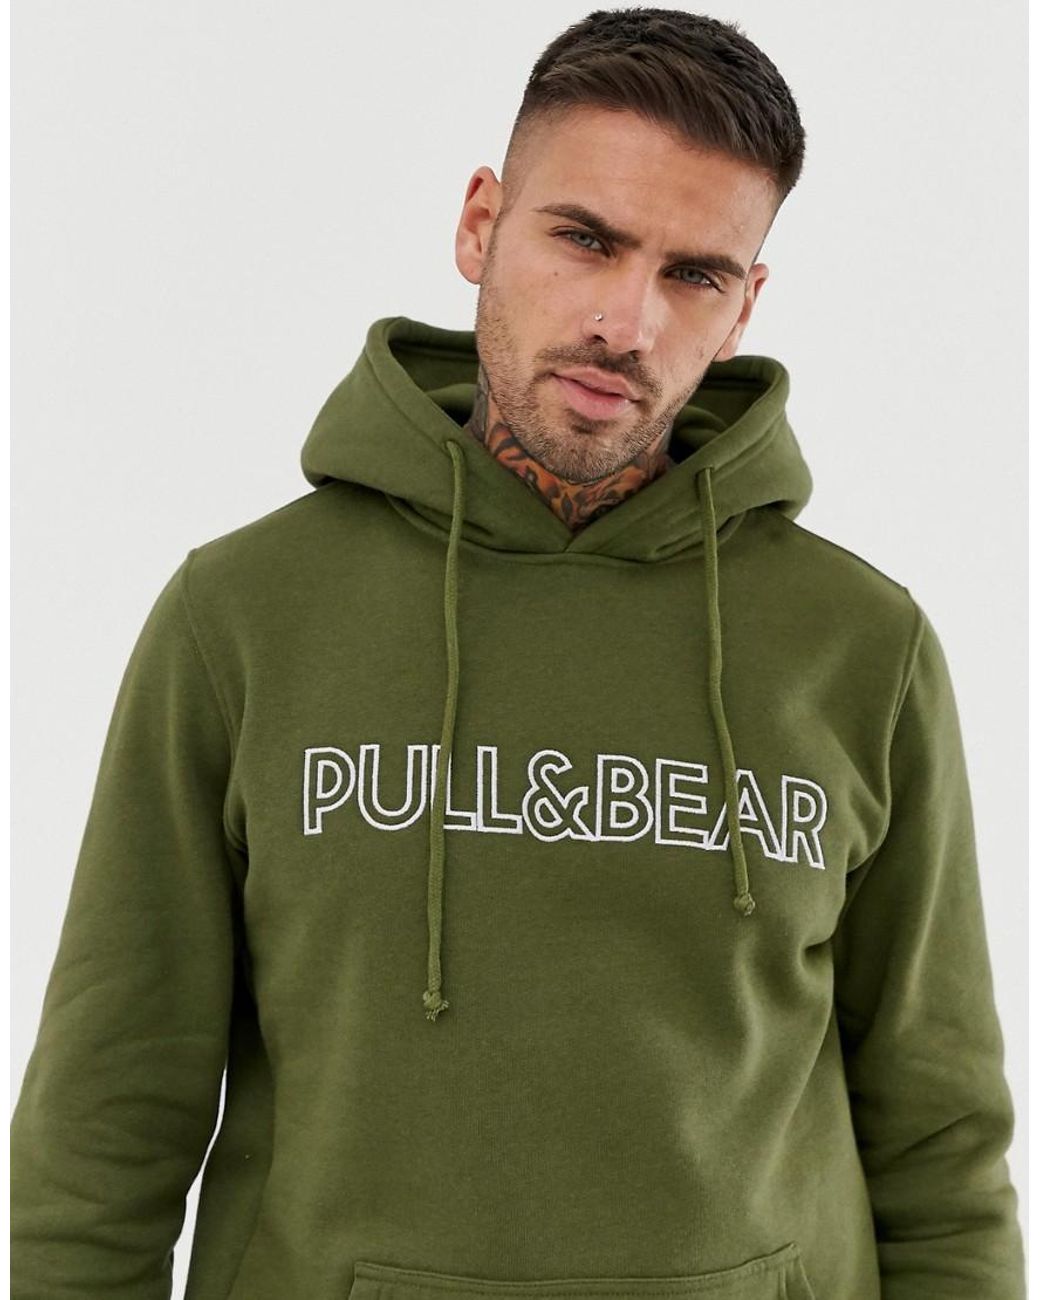 New York hoodie - PULL&BEAR